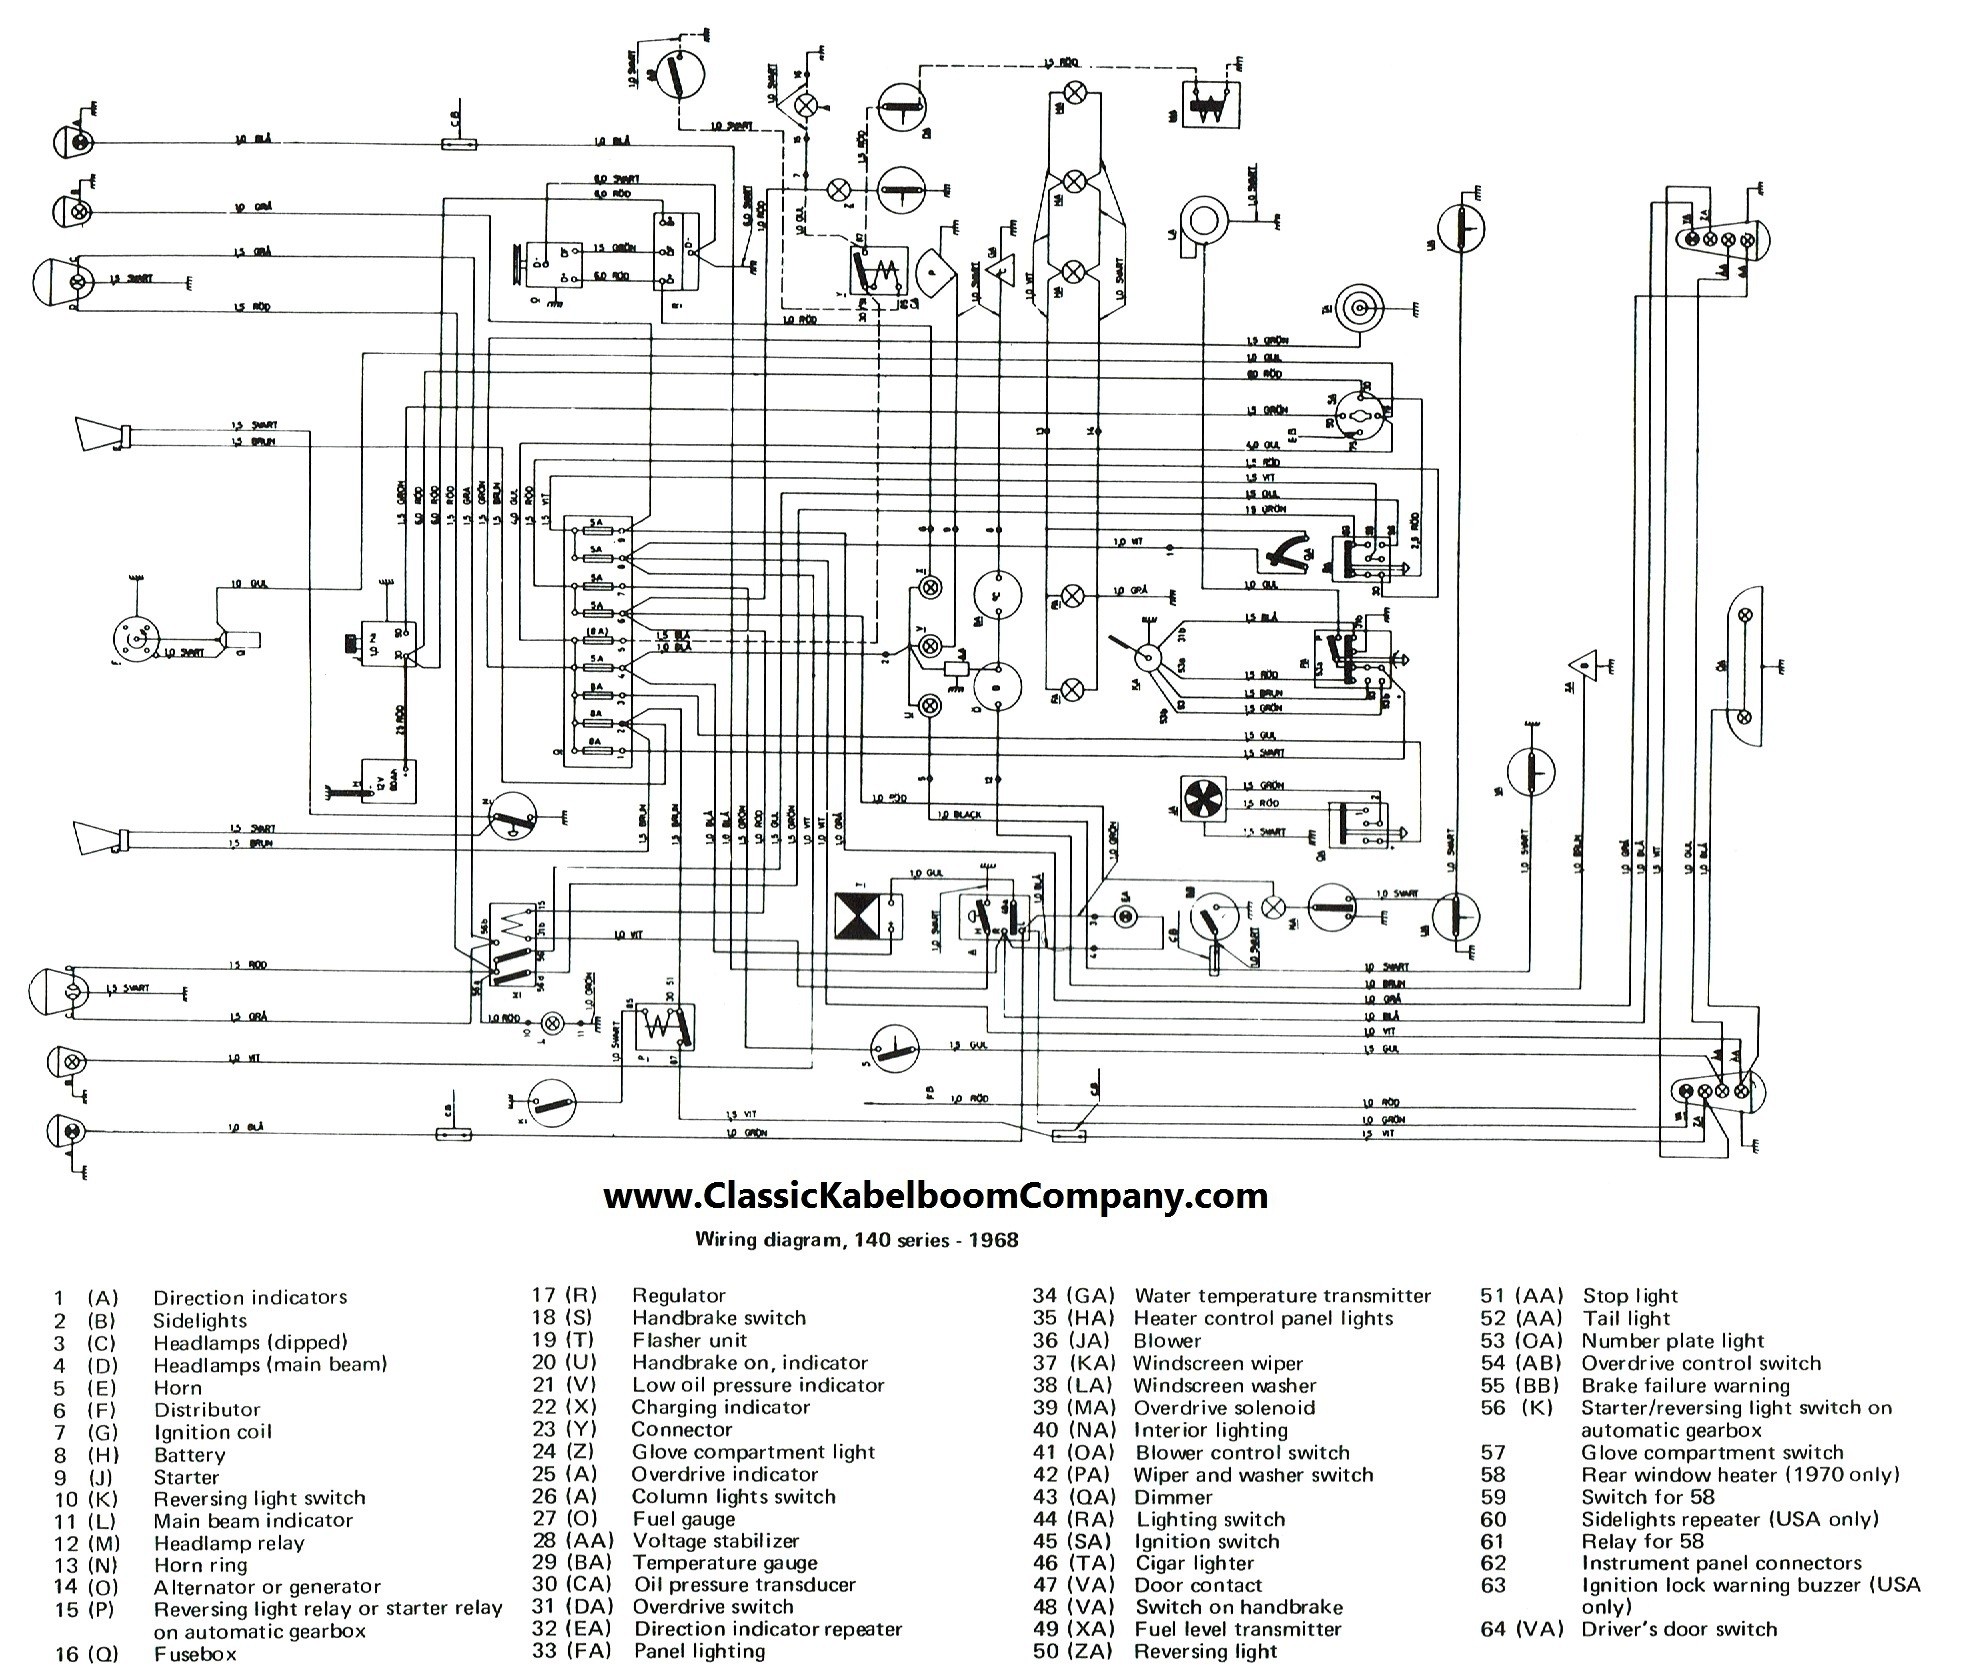 1991 toyota Pickup Tail Light Wiring Diagram Ta A Wiring Diagram Wiring Diagram Of 1991 toyota Pickup Tail Light Wiring Diagram